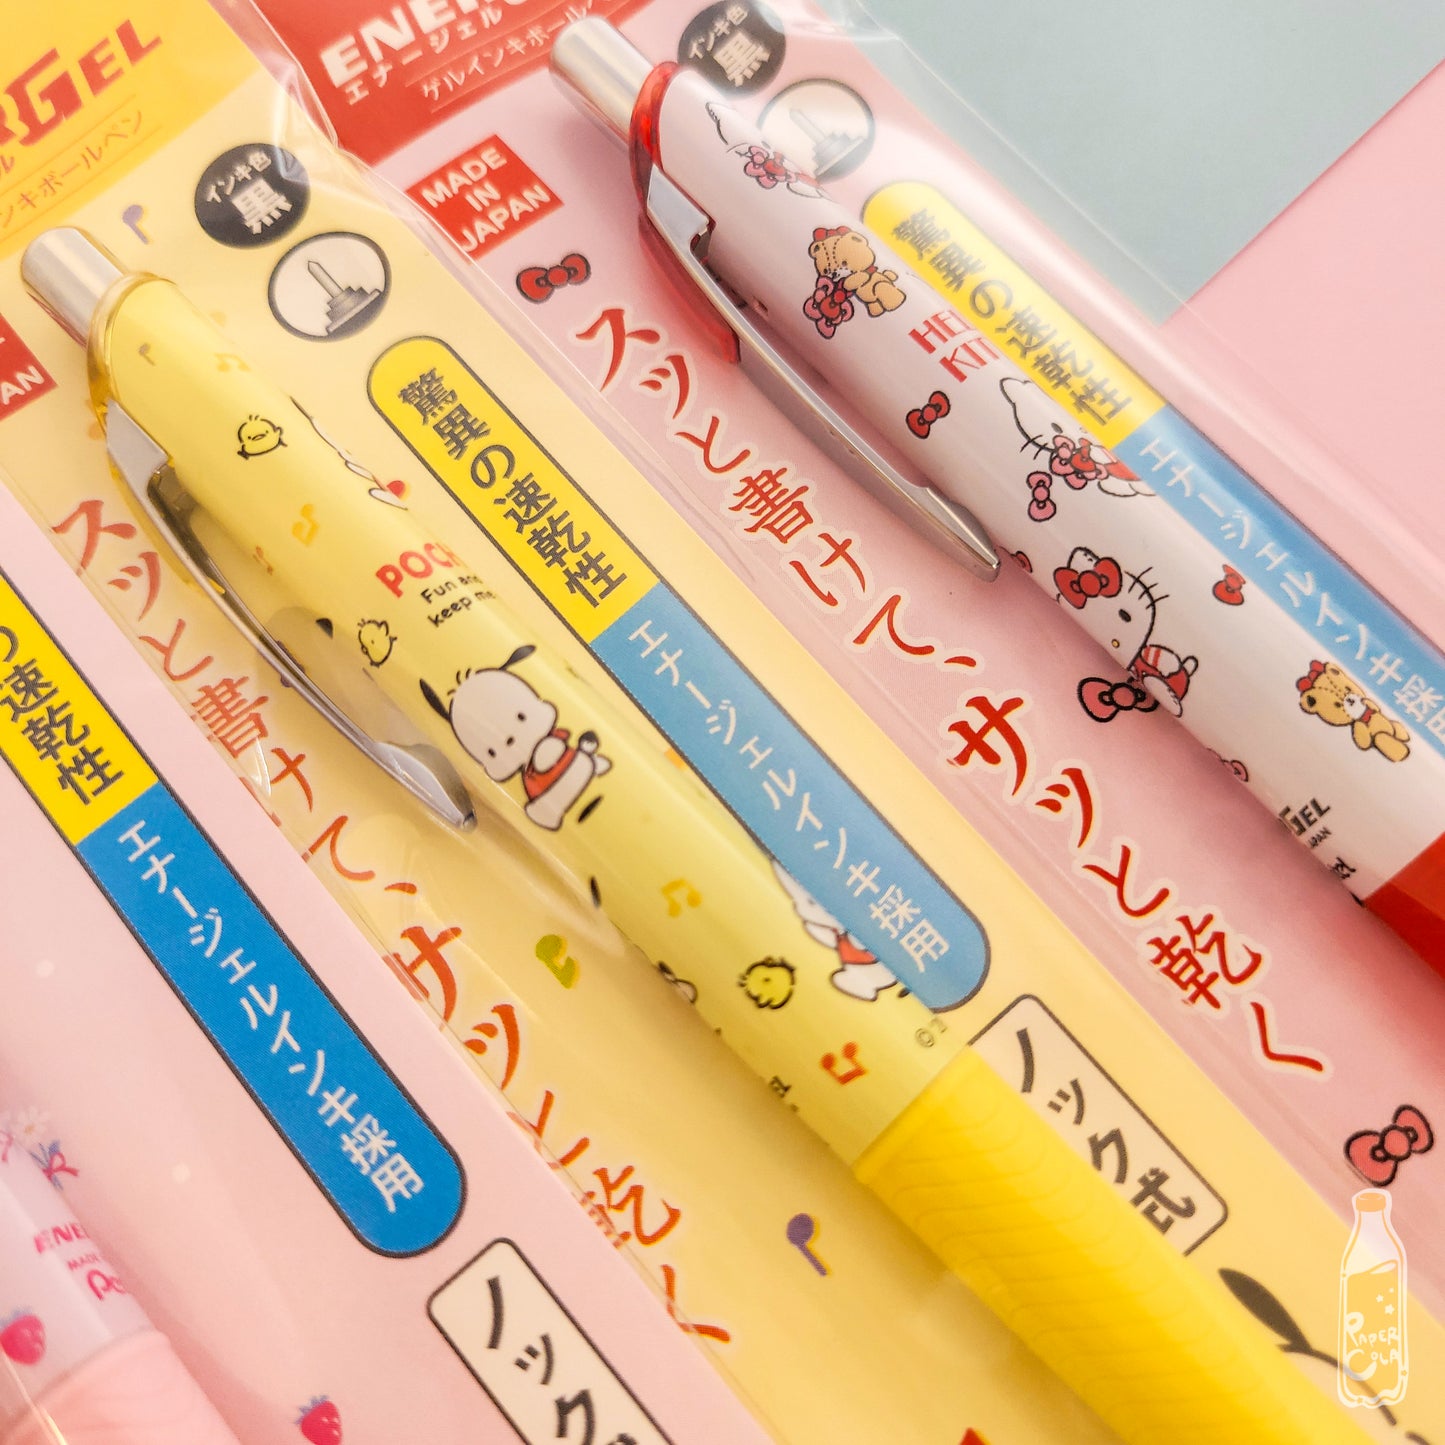 Sanrio EnerGel 0.5mm Ballpoint Pen